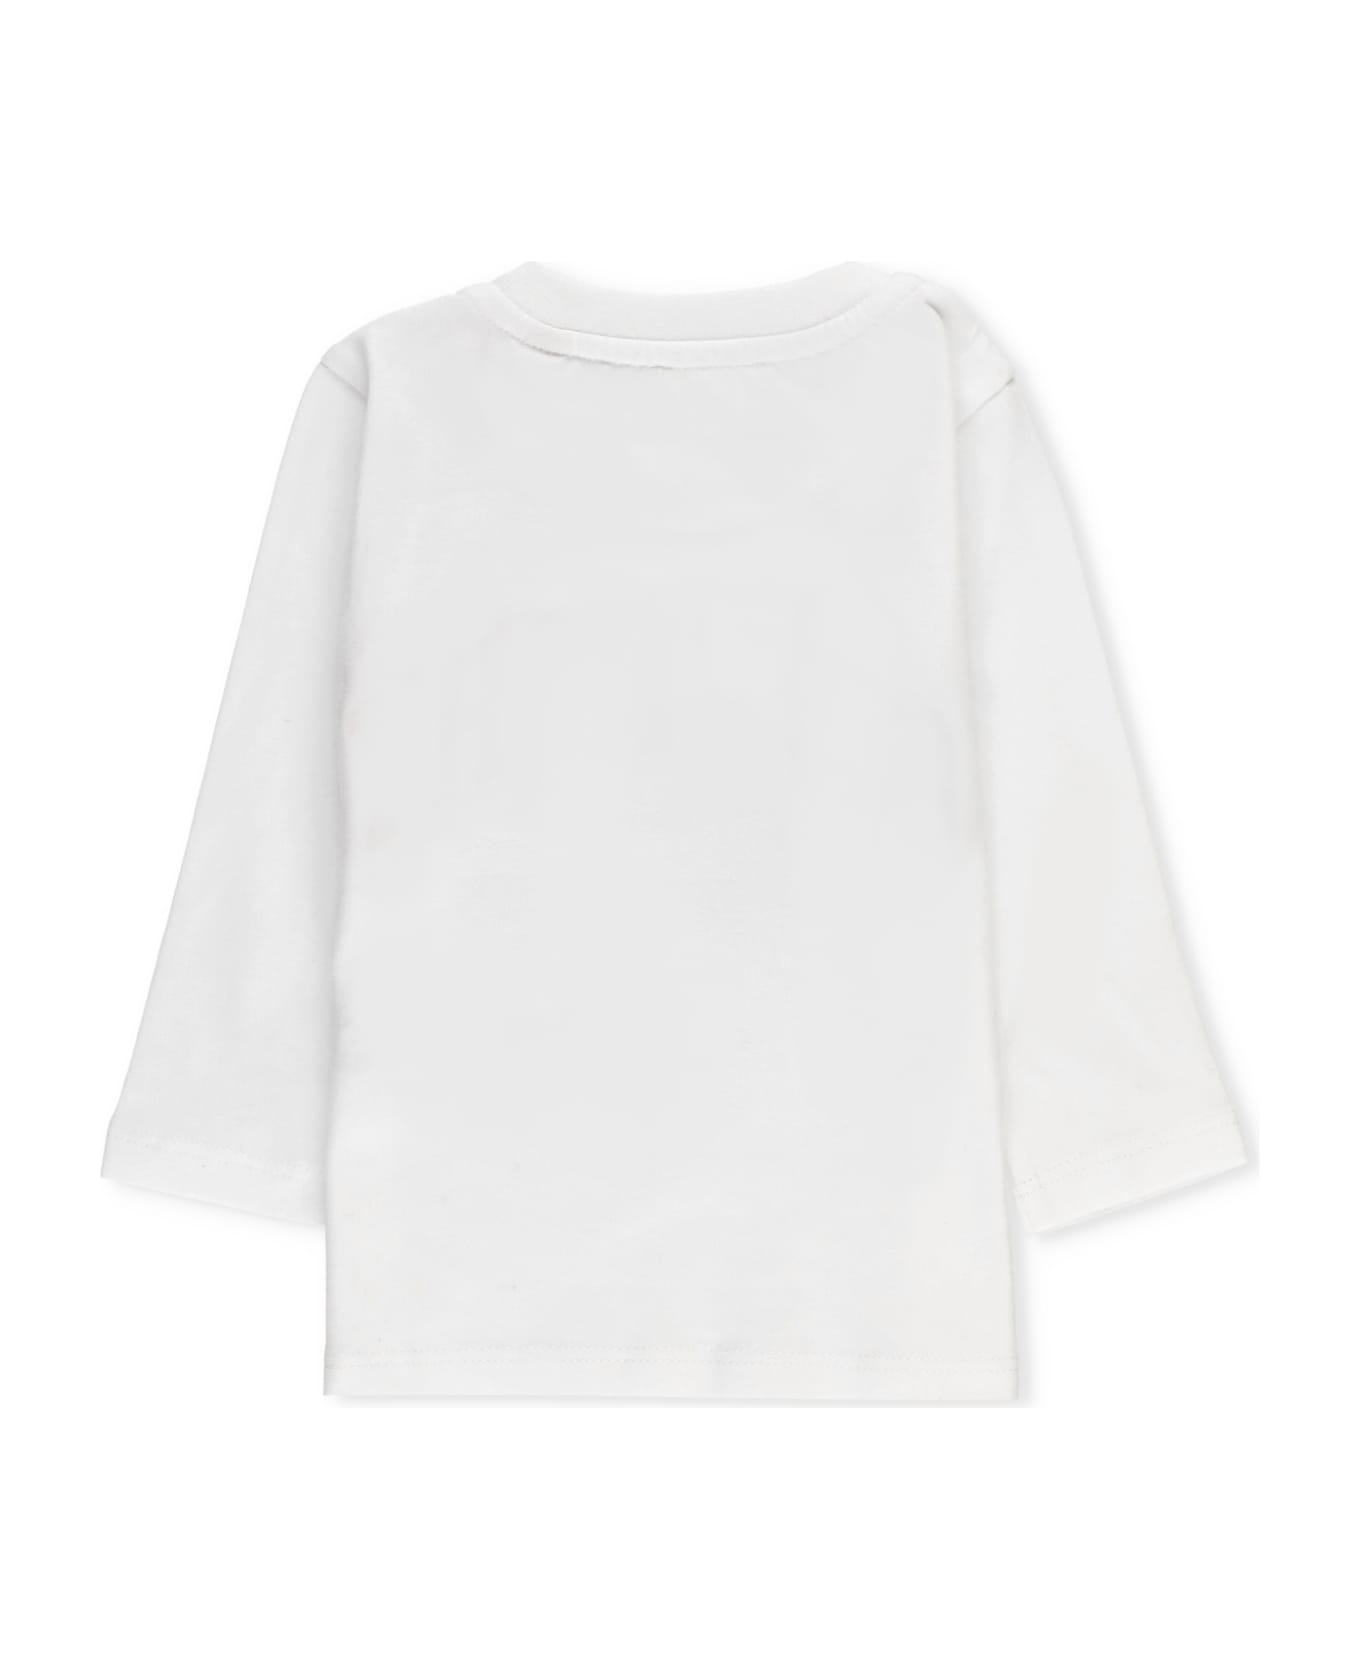 Givenchy Logoed T-shirt - White